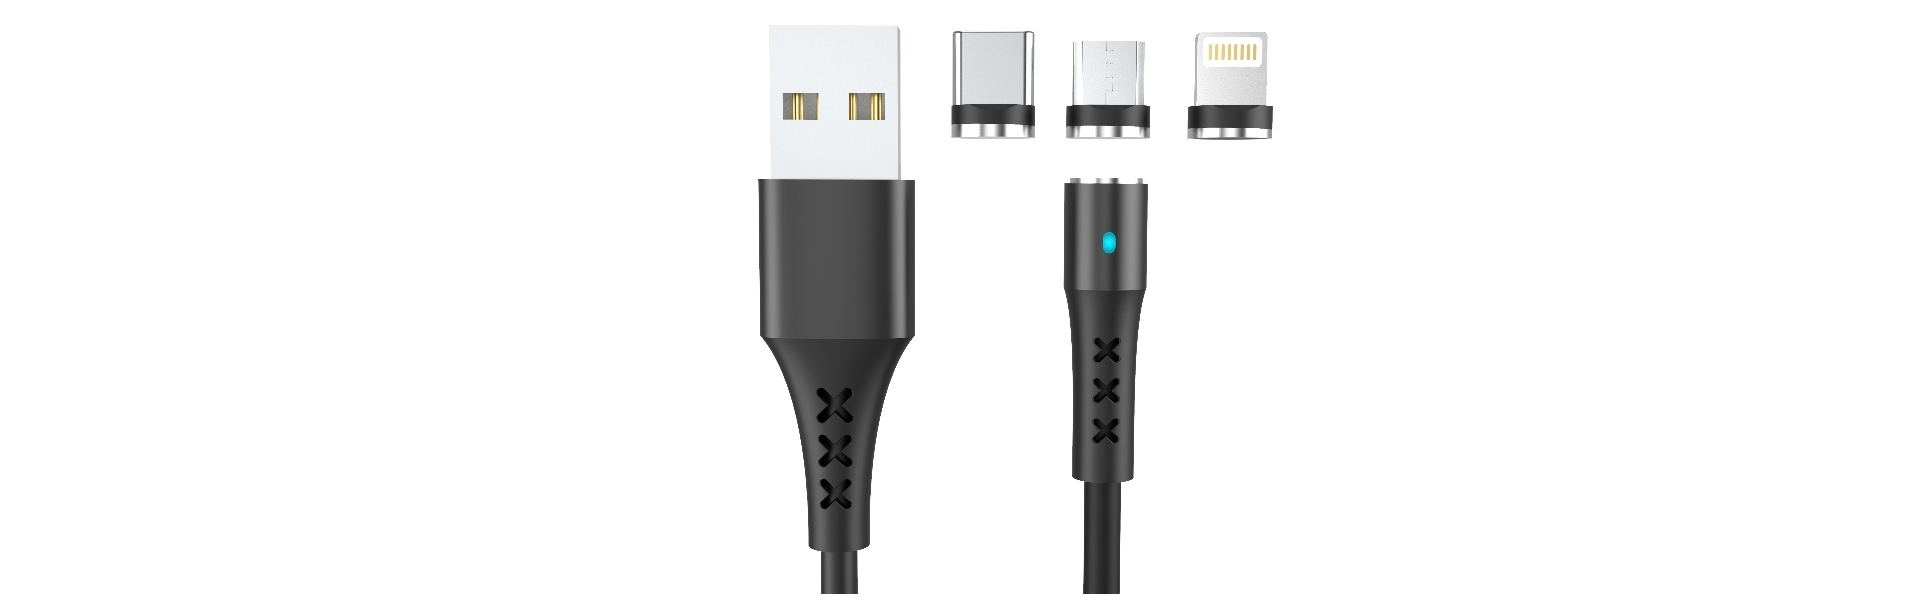 USB кабелна, USB кабел, кабел за данни,Dong Guan Rong Pin Electronic Technology Co.Ltd